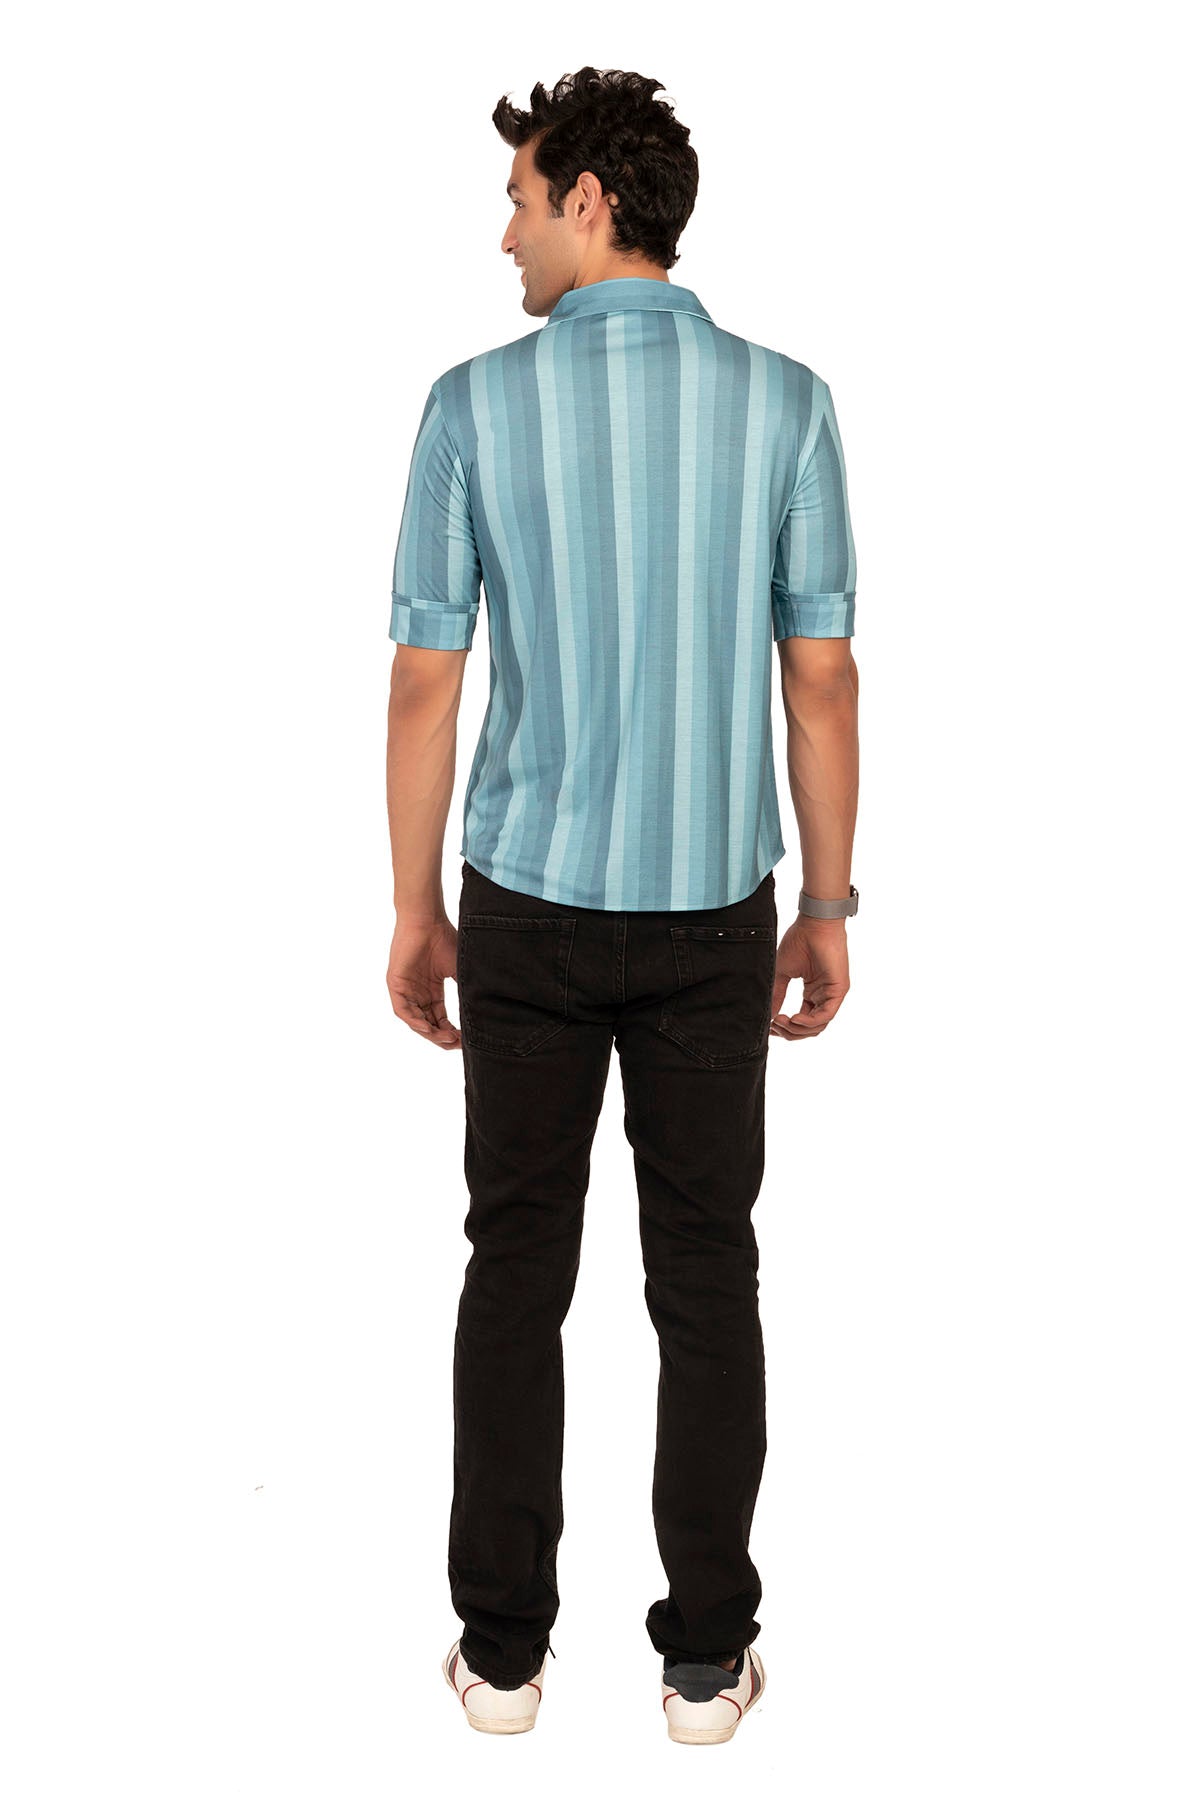 Teal Blue Vertical Large Stripe Regular Fit Shirtee